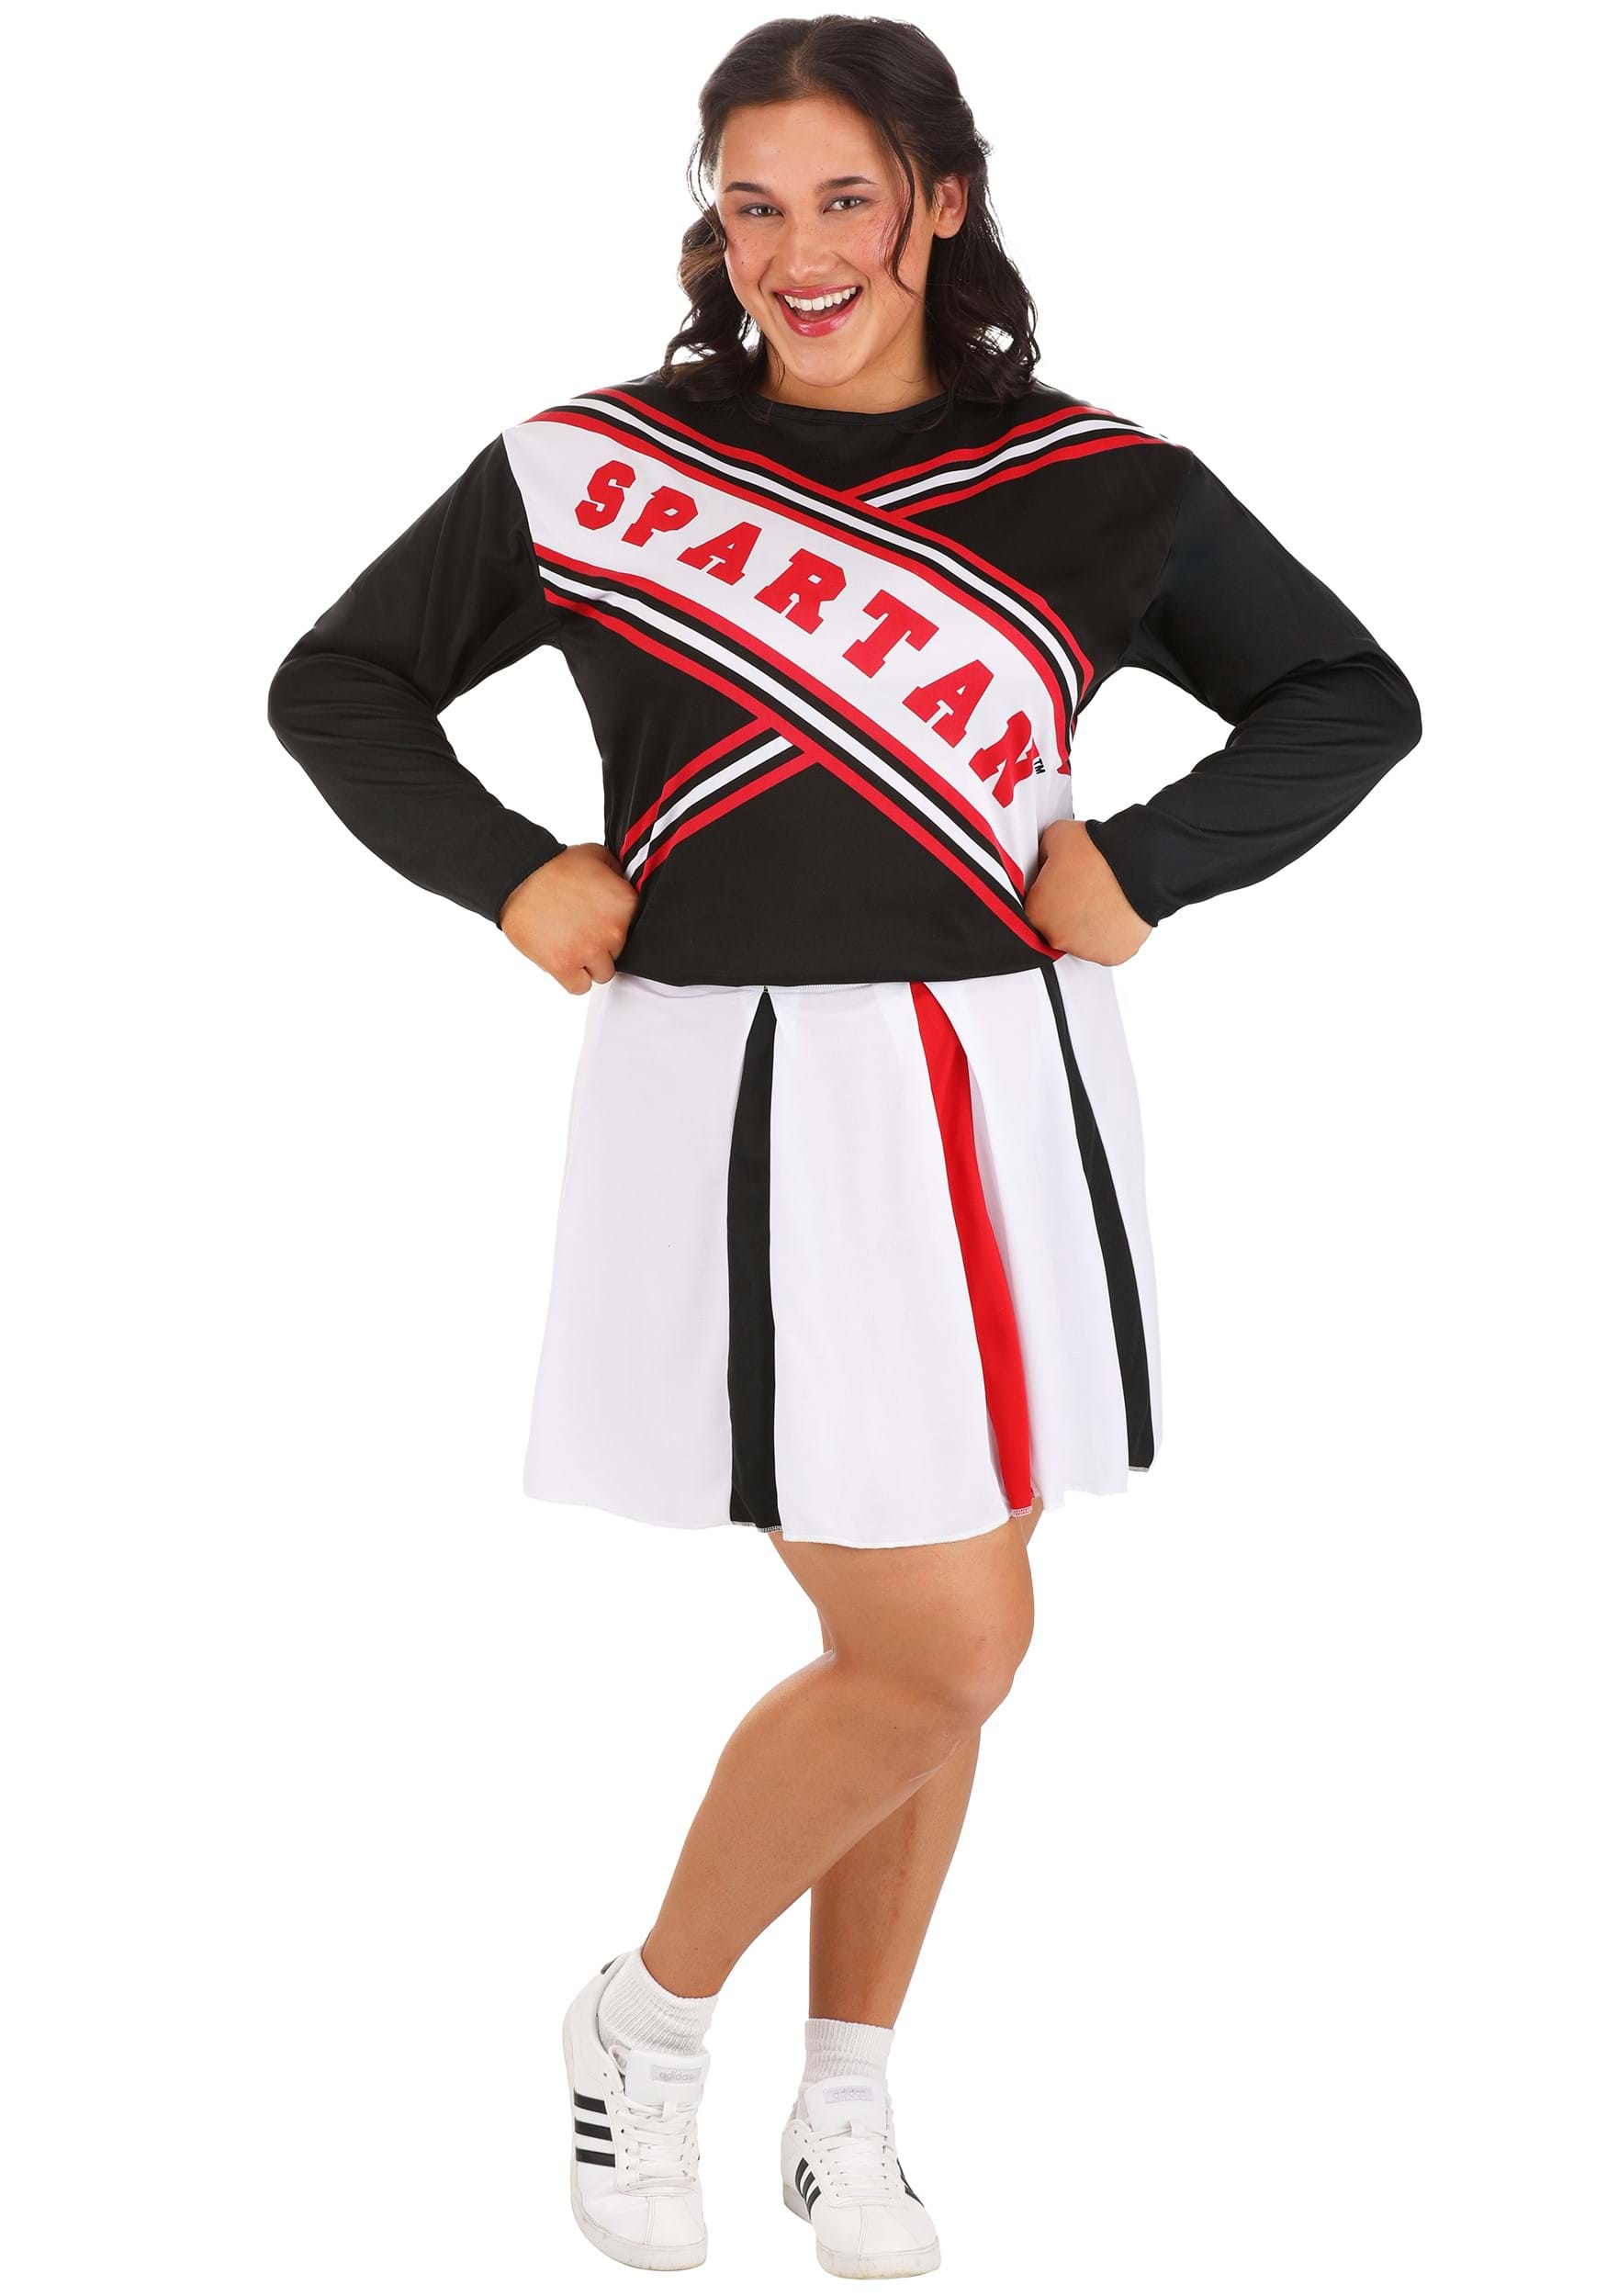 Plus Size Saturday Night Live Spartan Female Cheerleader Women's Fancy Dress Costume